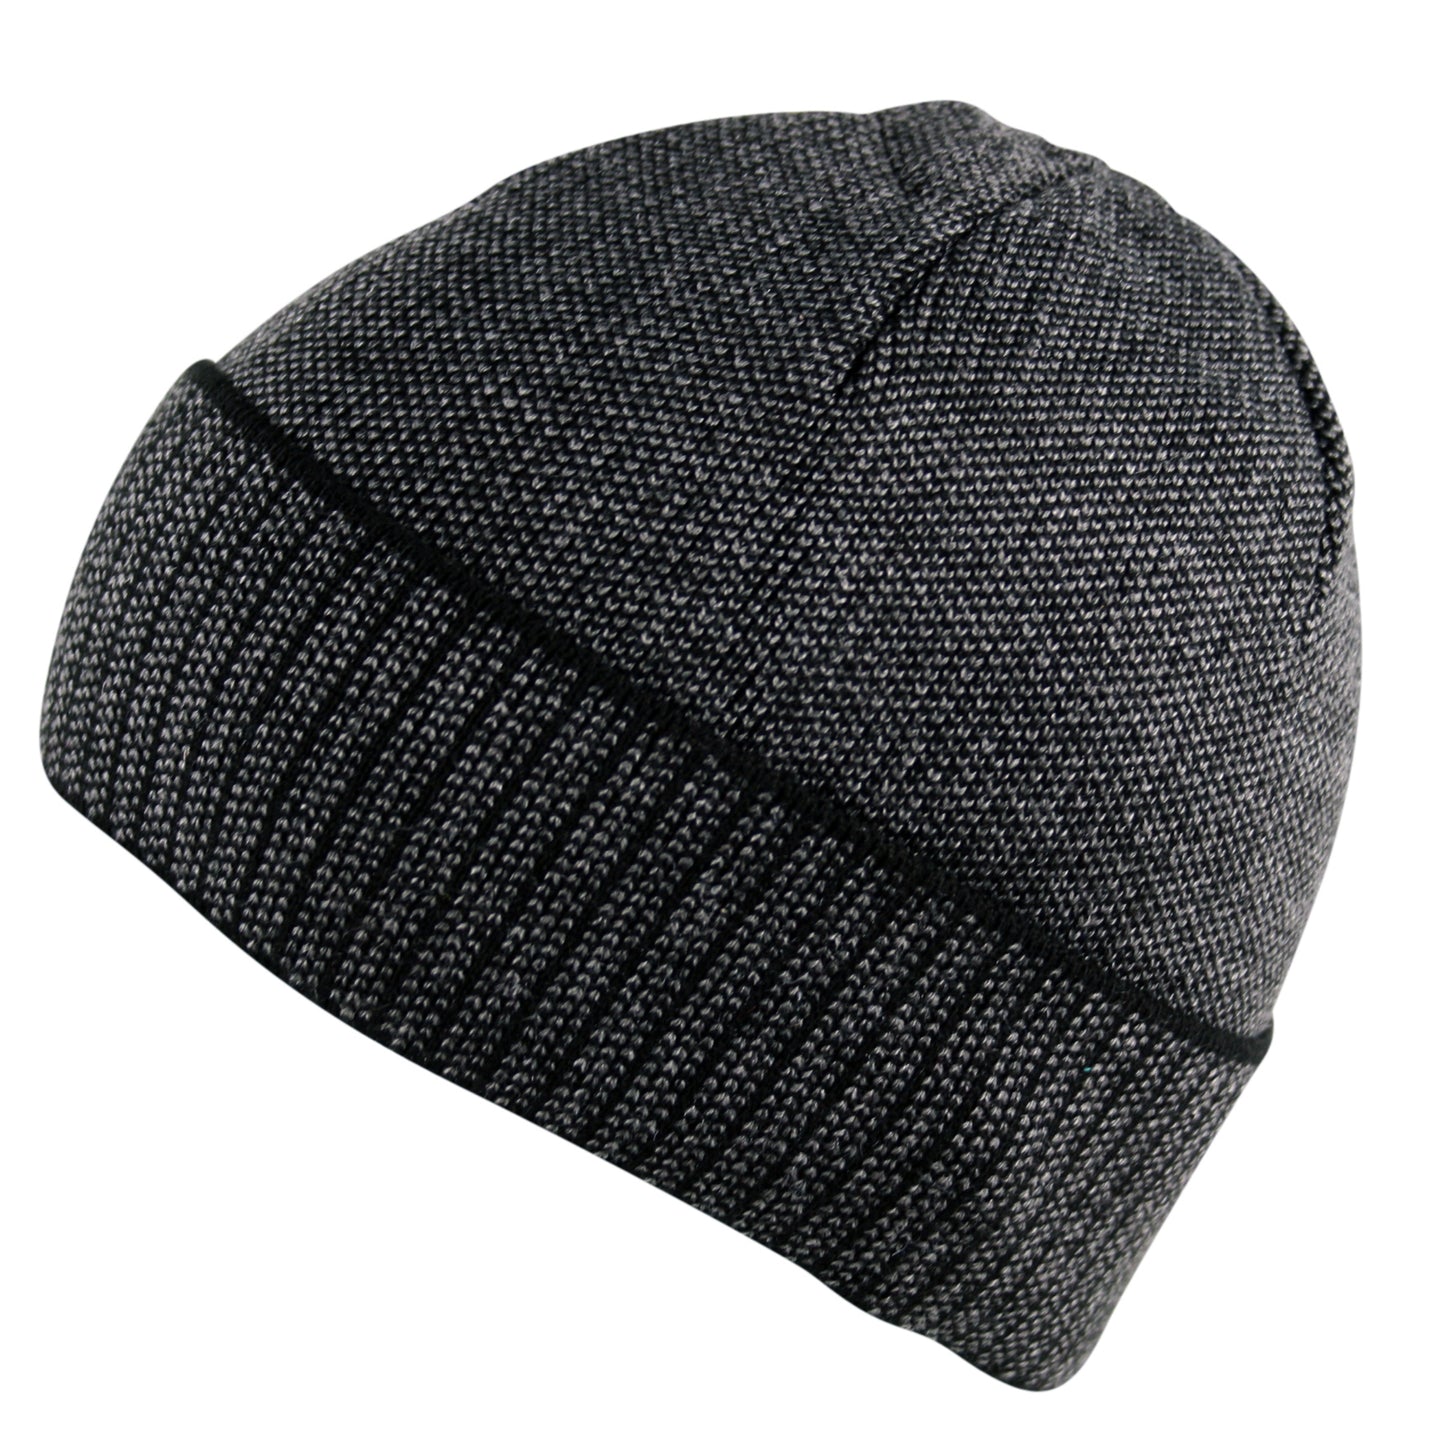 Men's Turn up Beanie Hat Warm Cap in Charcoal